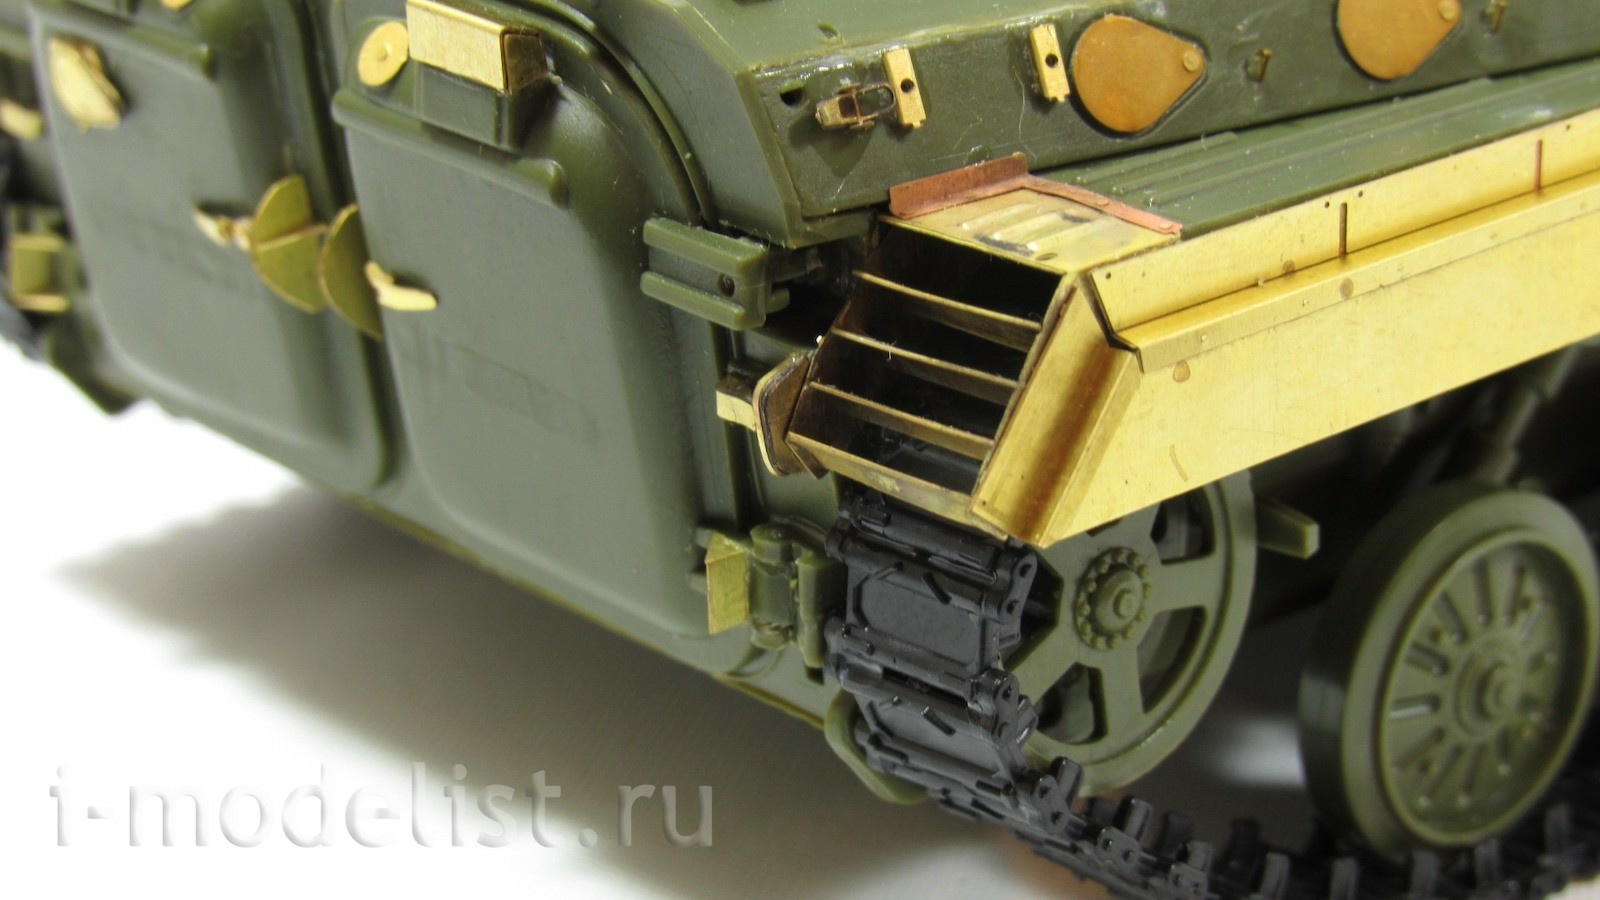 035331 Microdesign 1/35 BMP-2